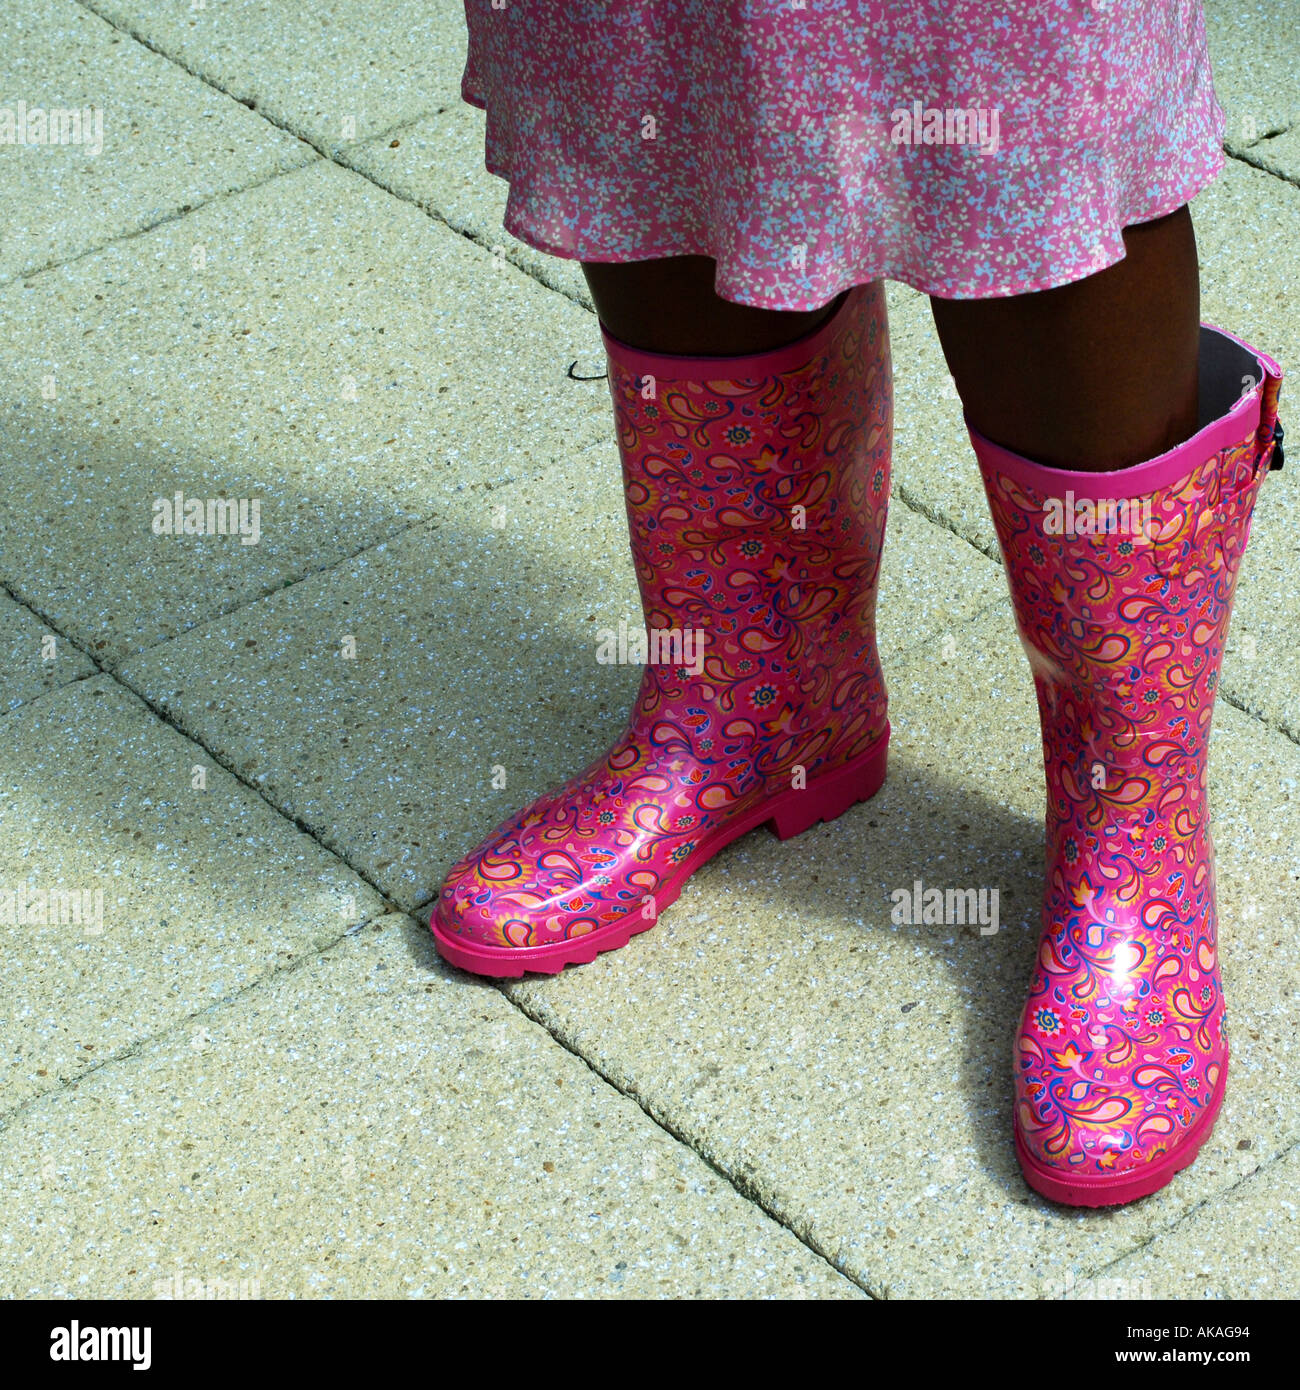 Black Woman in Pink Wellies Stock Photo - Alamy